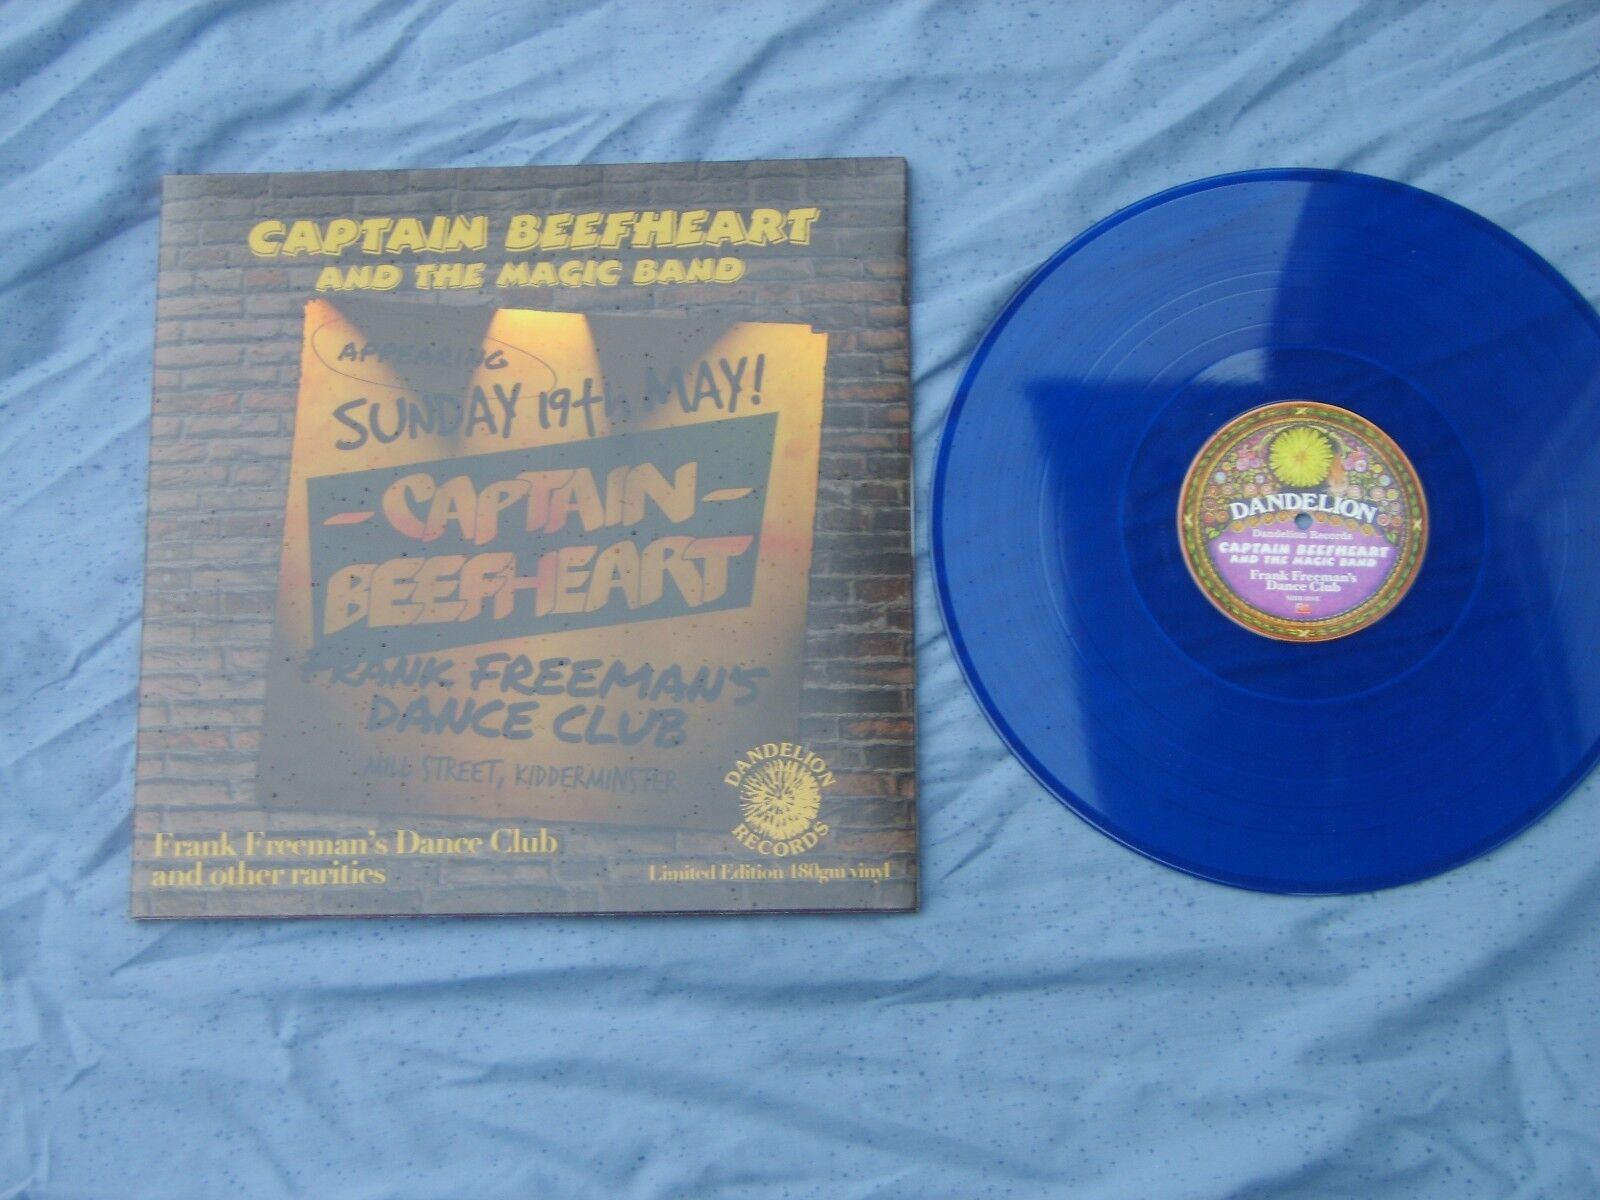 Captain Beefheart - Frank Freeman's Dance Club NEW 12" BLUE 180G VINYL LP 